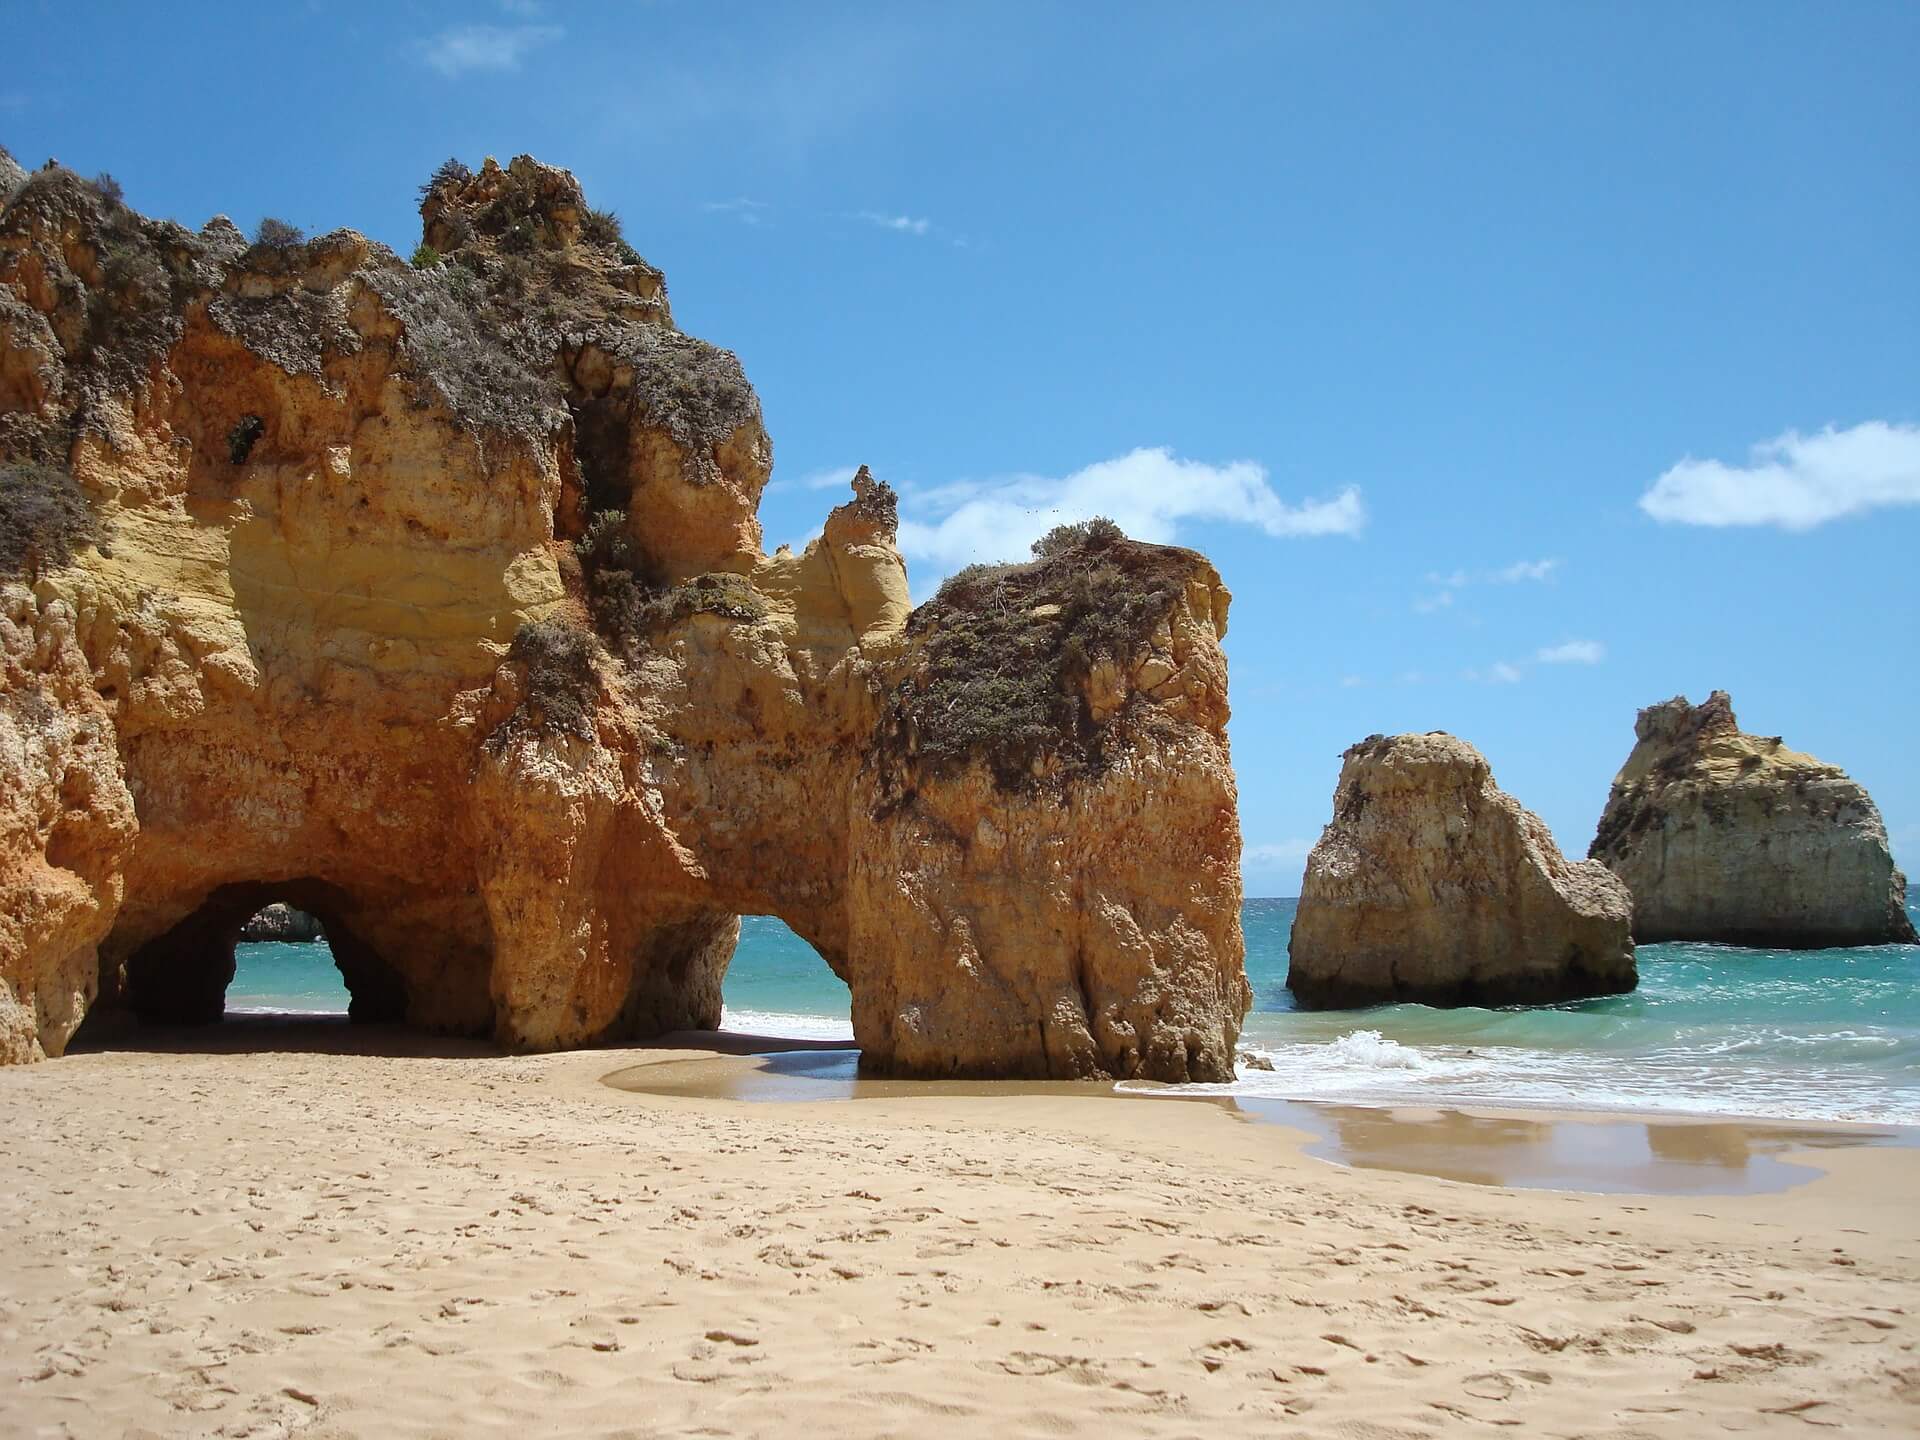 Algarvekysten